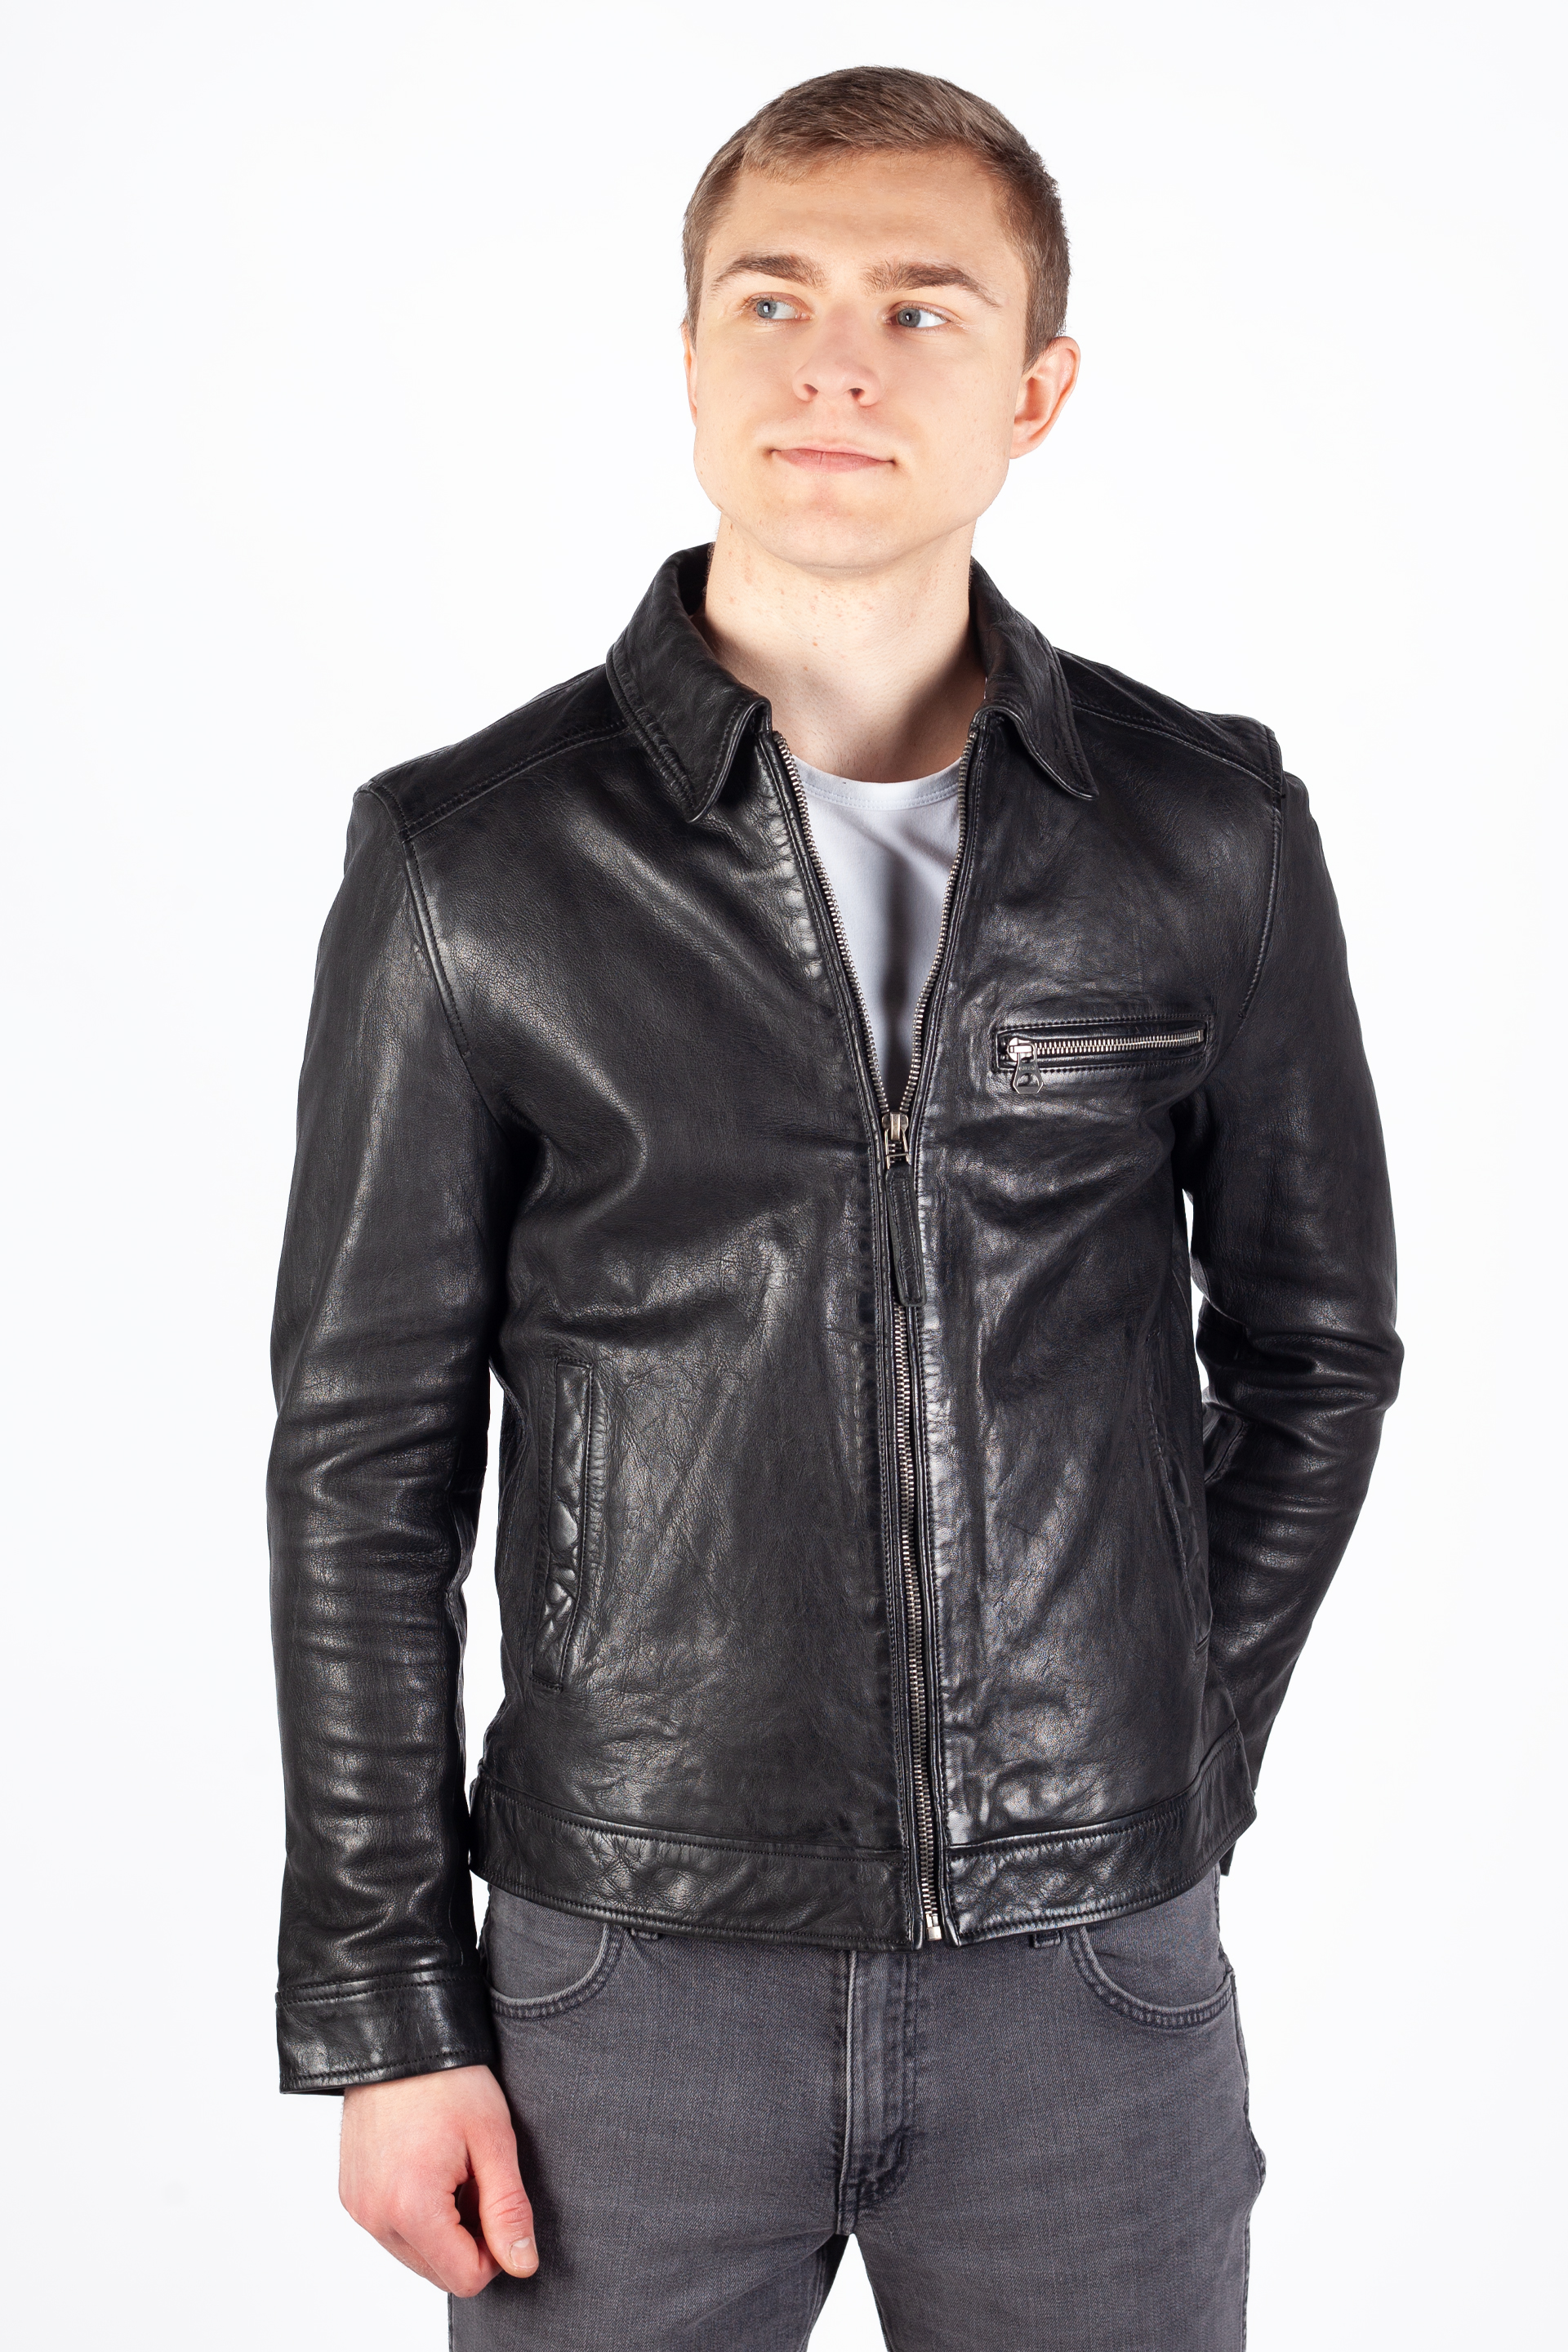 Leather jacket GIPSY 1201-0492-black